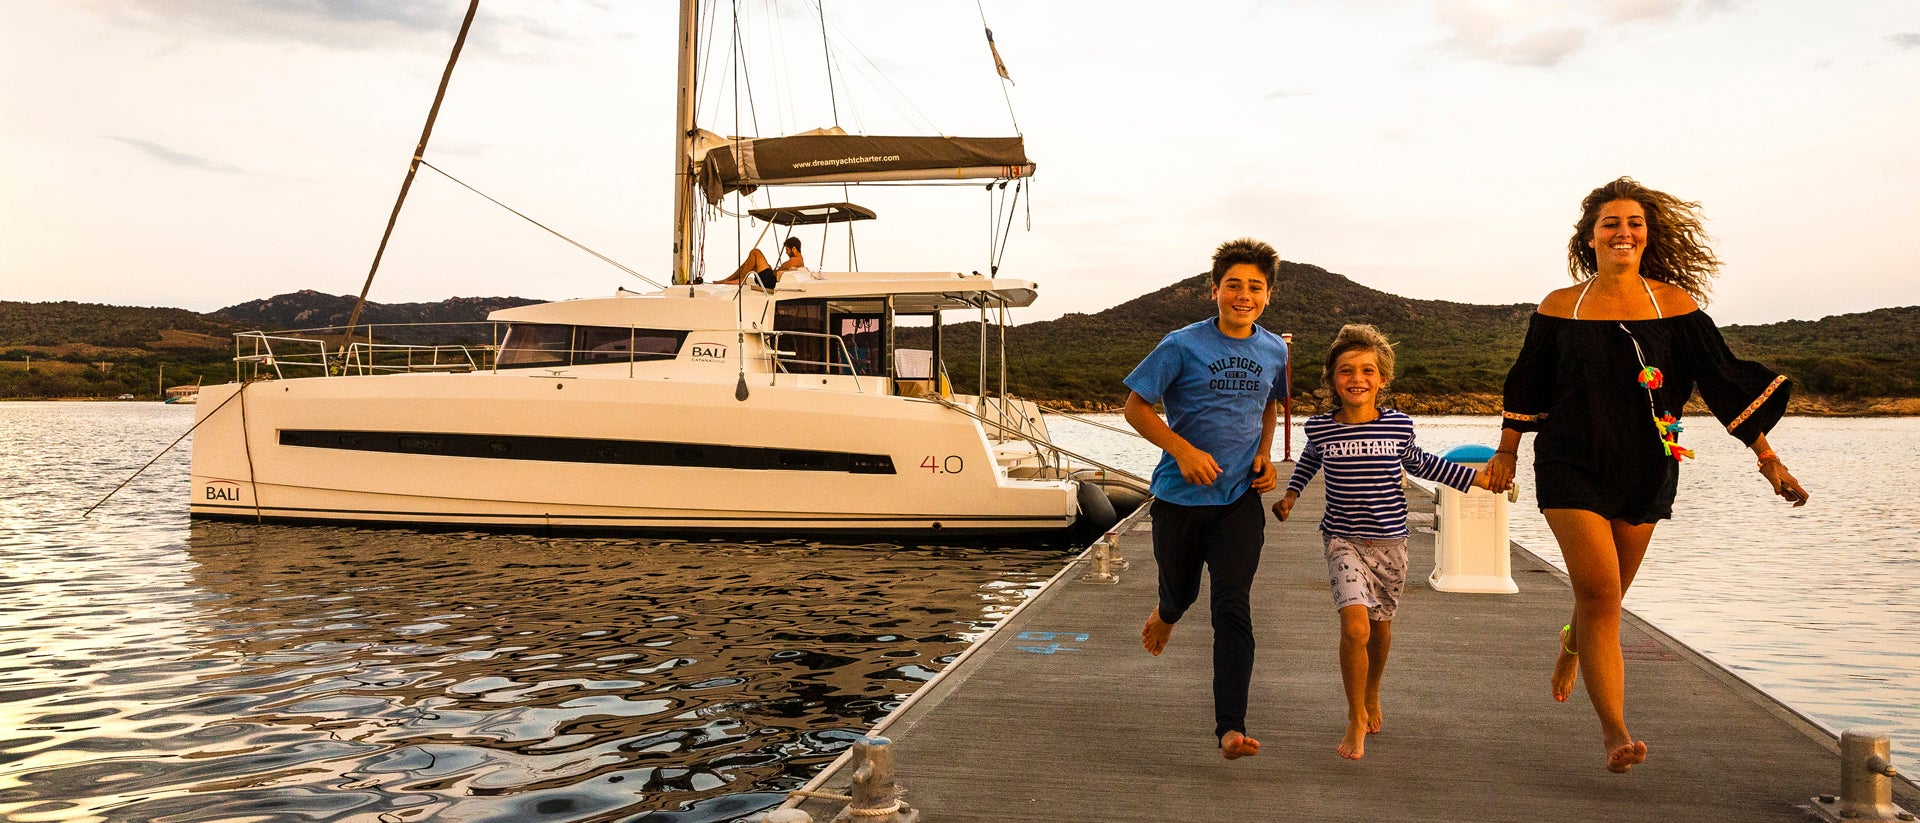 Yachtcharter Korsika, glückliche Familie im Hafen Katamarancharter